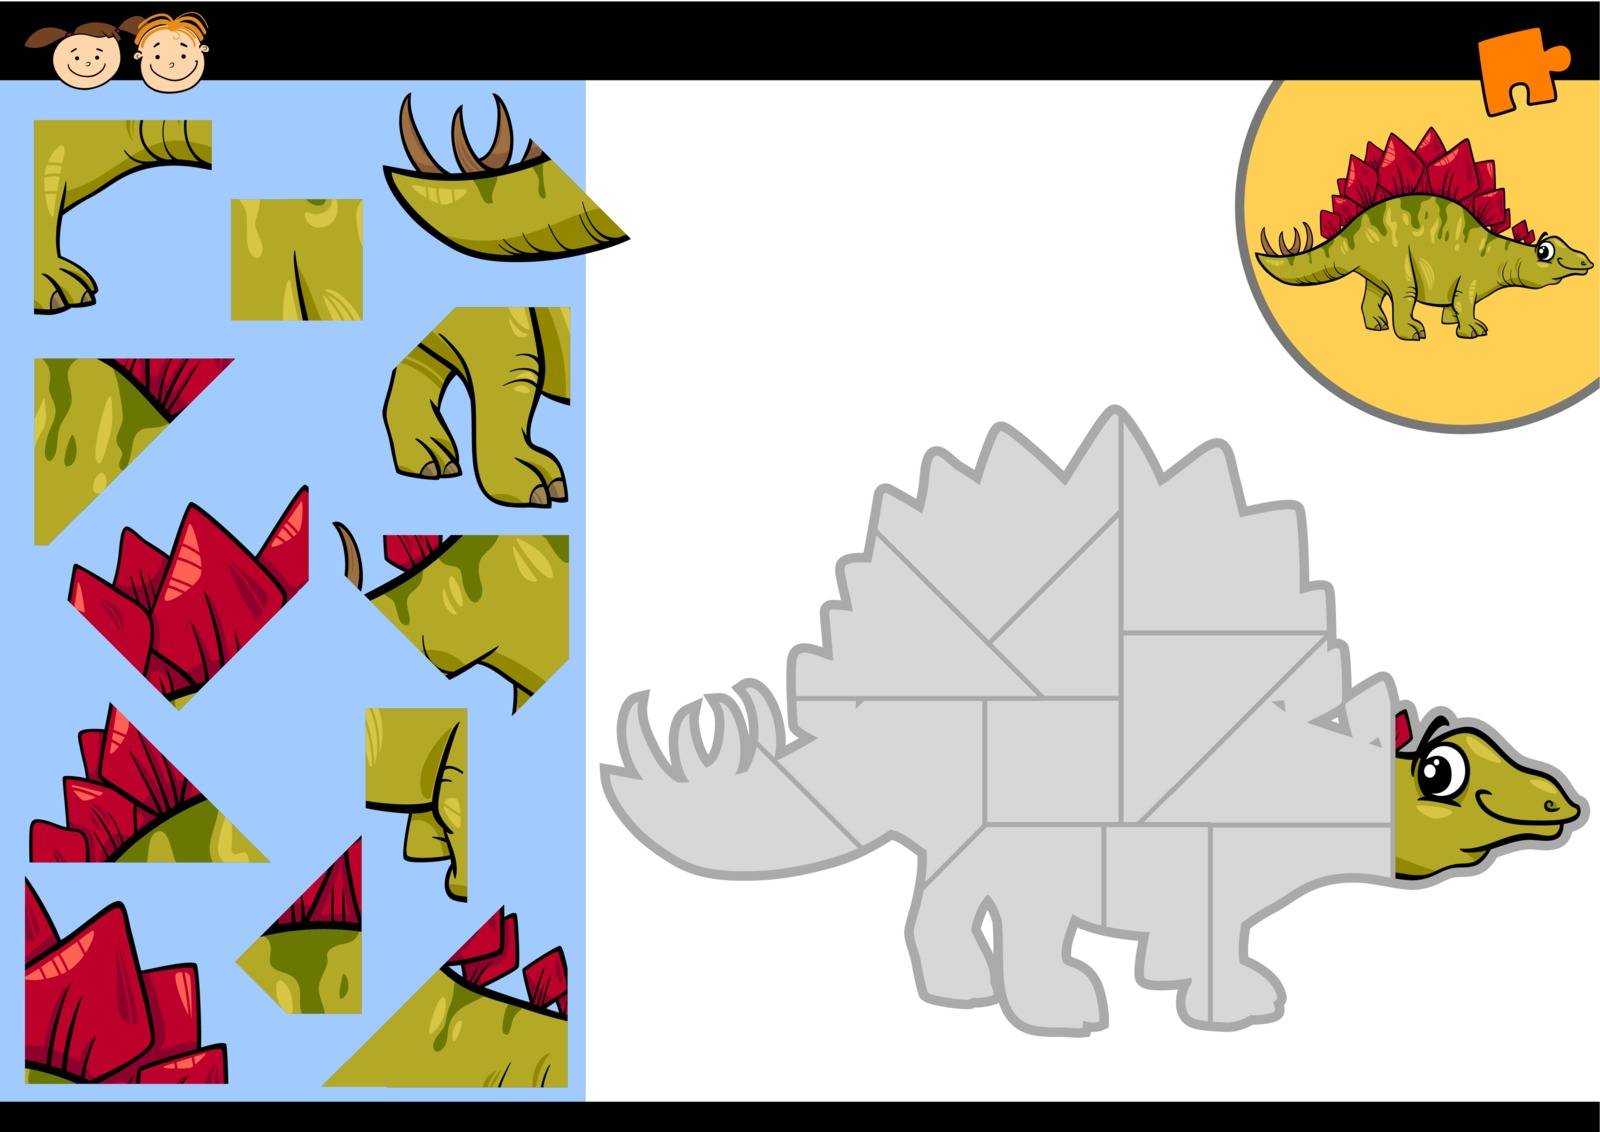 Cartoon Illustration of Education Jigsaw Puzzle Game for Preschool Children with Funny Stegosaurus Dinosaur Character